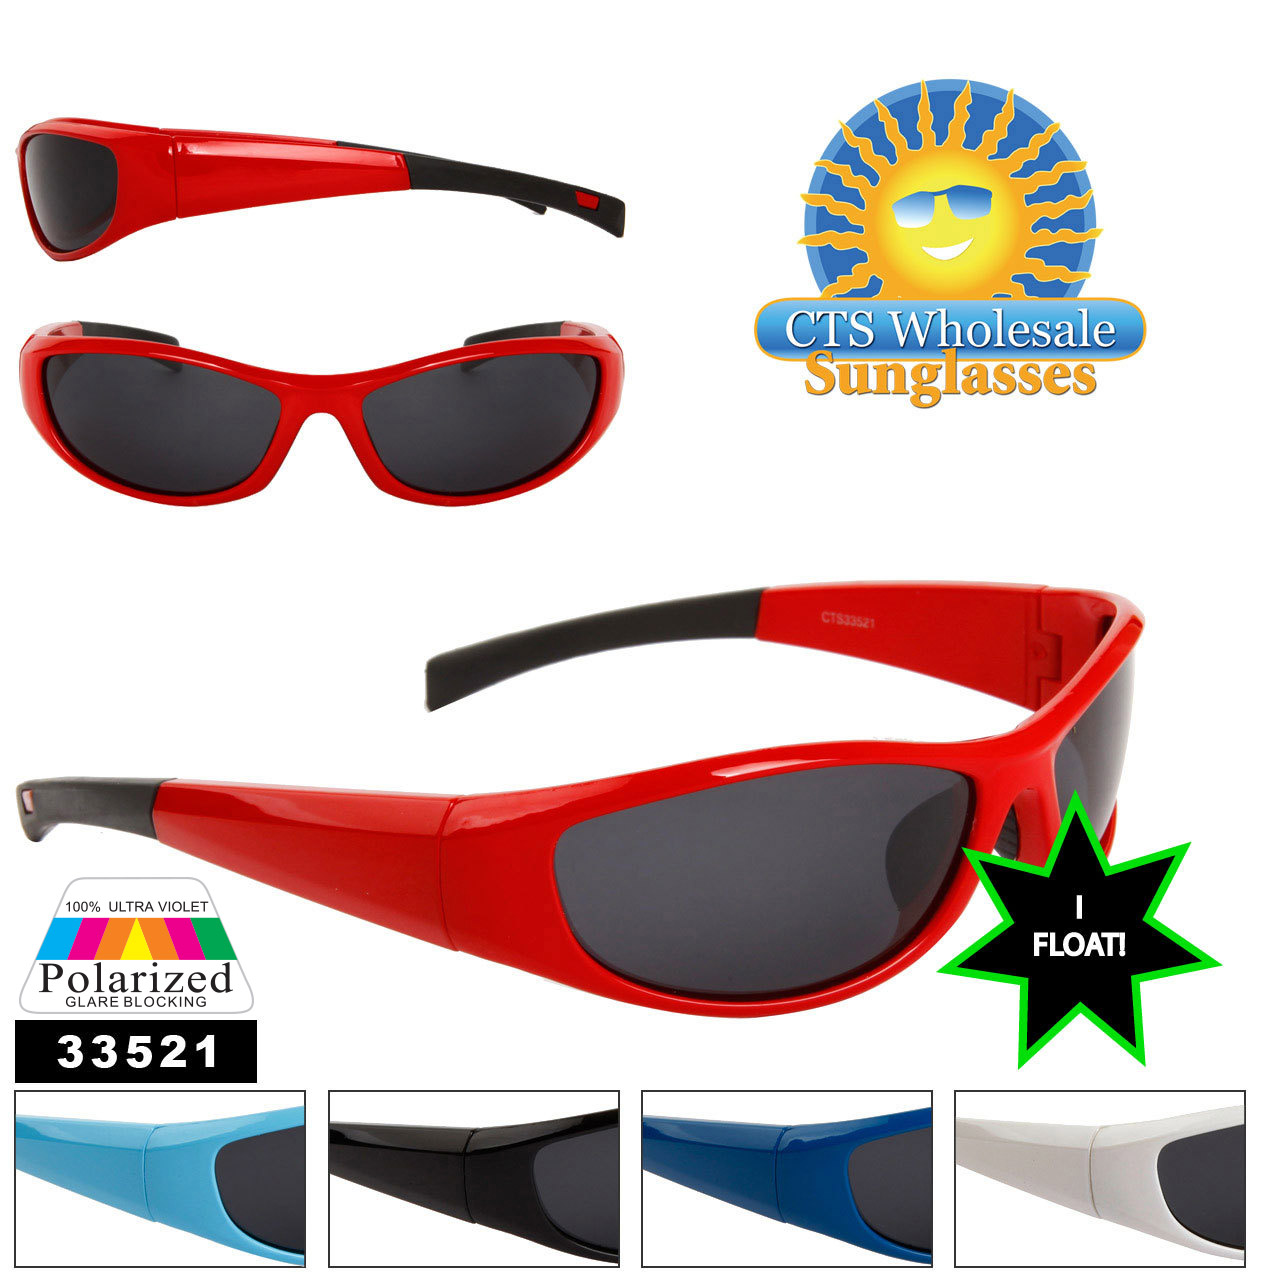 Floating Polarized Sunglasses - Style # 33521 Great Fishing Sunglasses! (Assorted Colors) (12 pcs.)